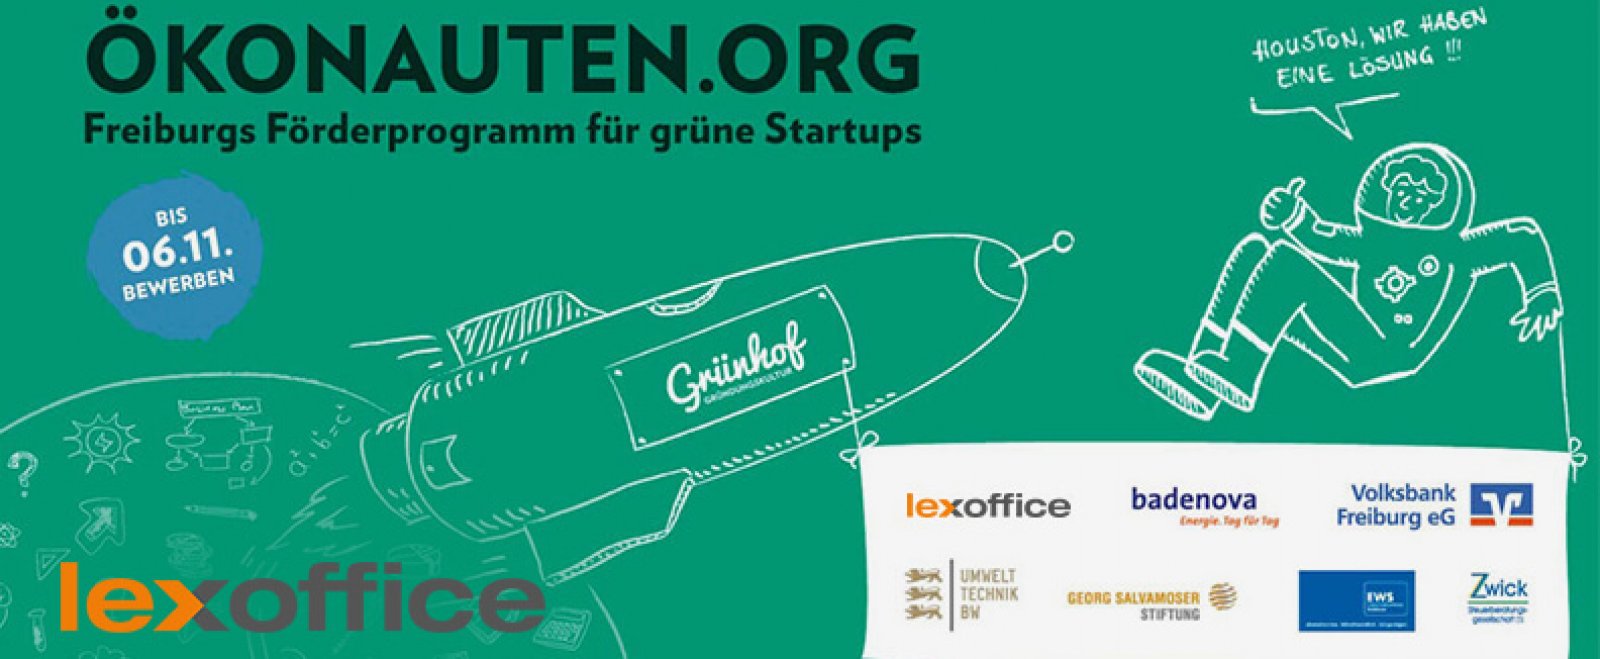 lexoffice ist Partner des Ökonauten Förderprogramms für Start-ups